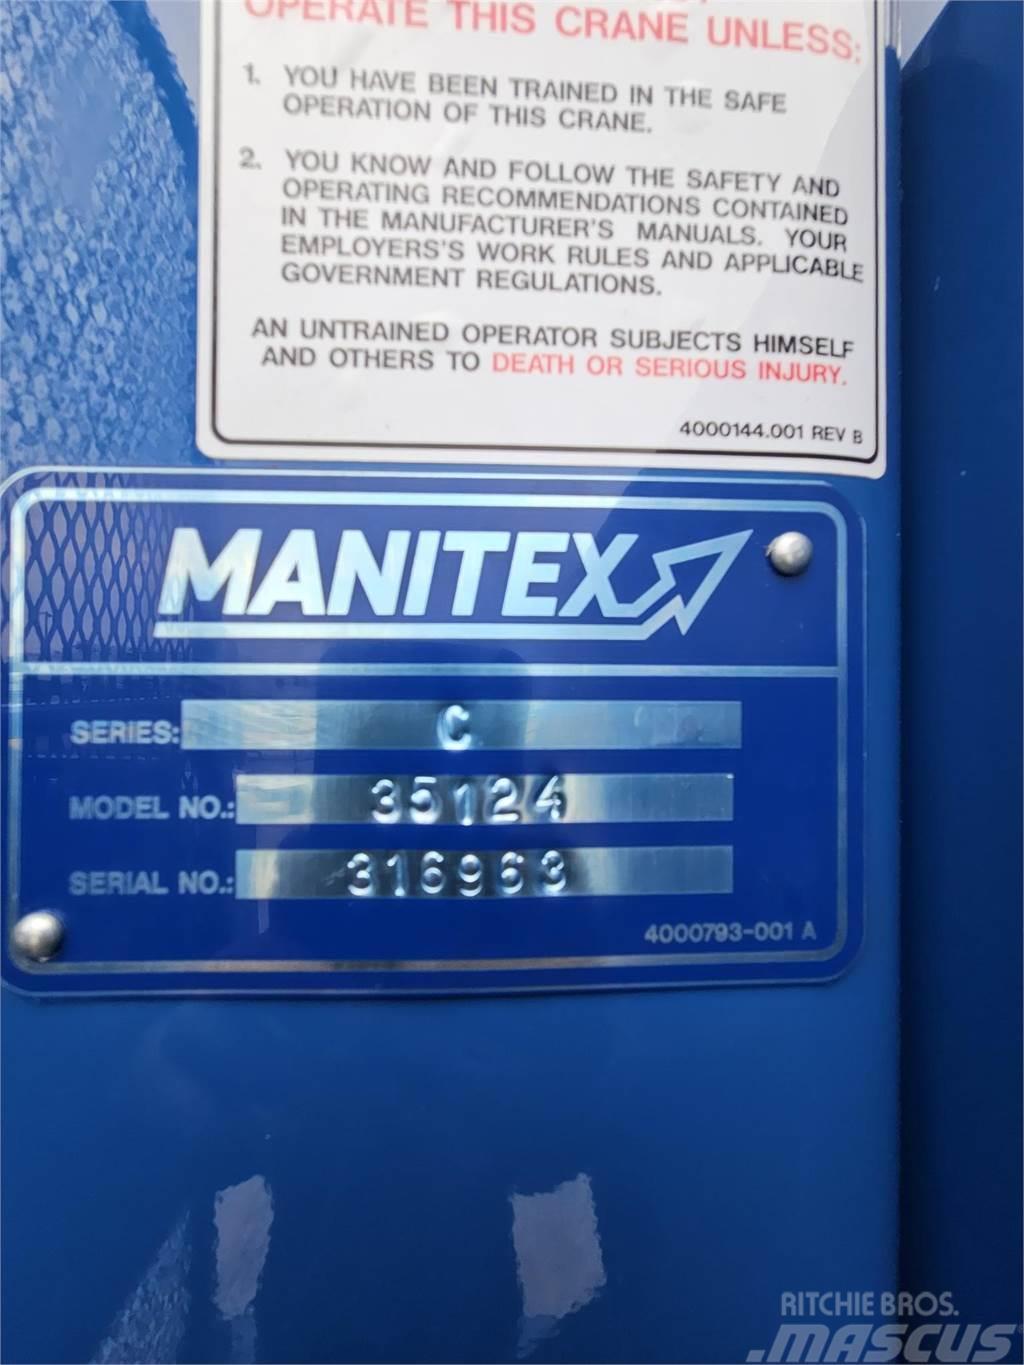 Manitex 35124C Crane trucks